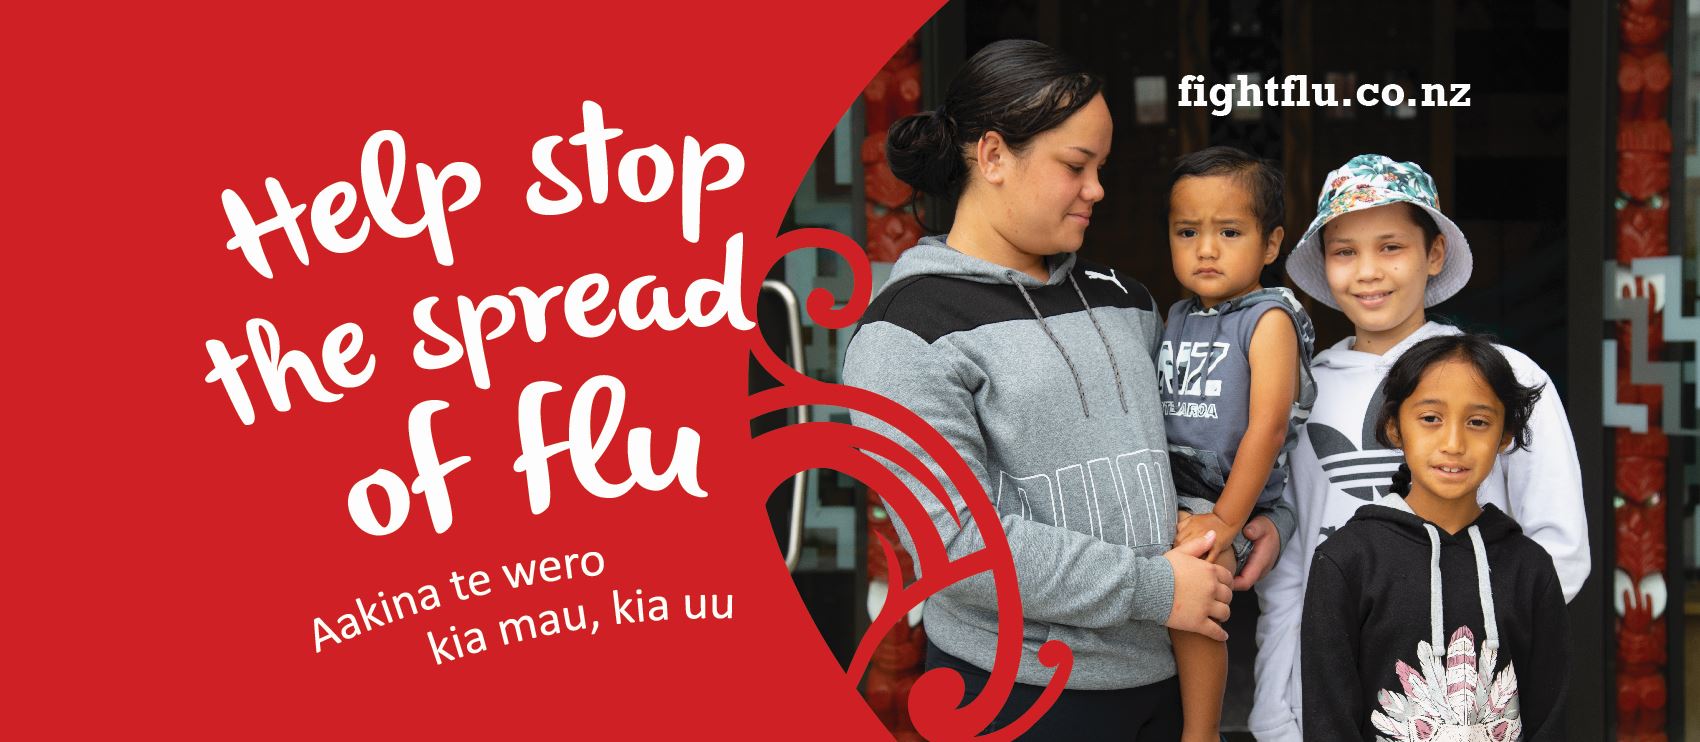 flu  campaign facebook